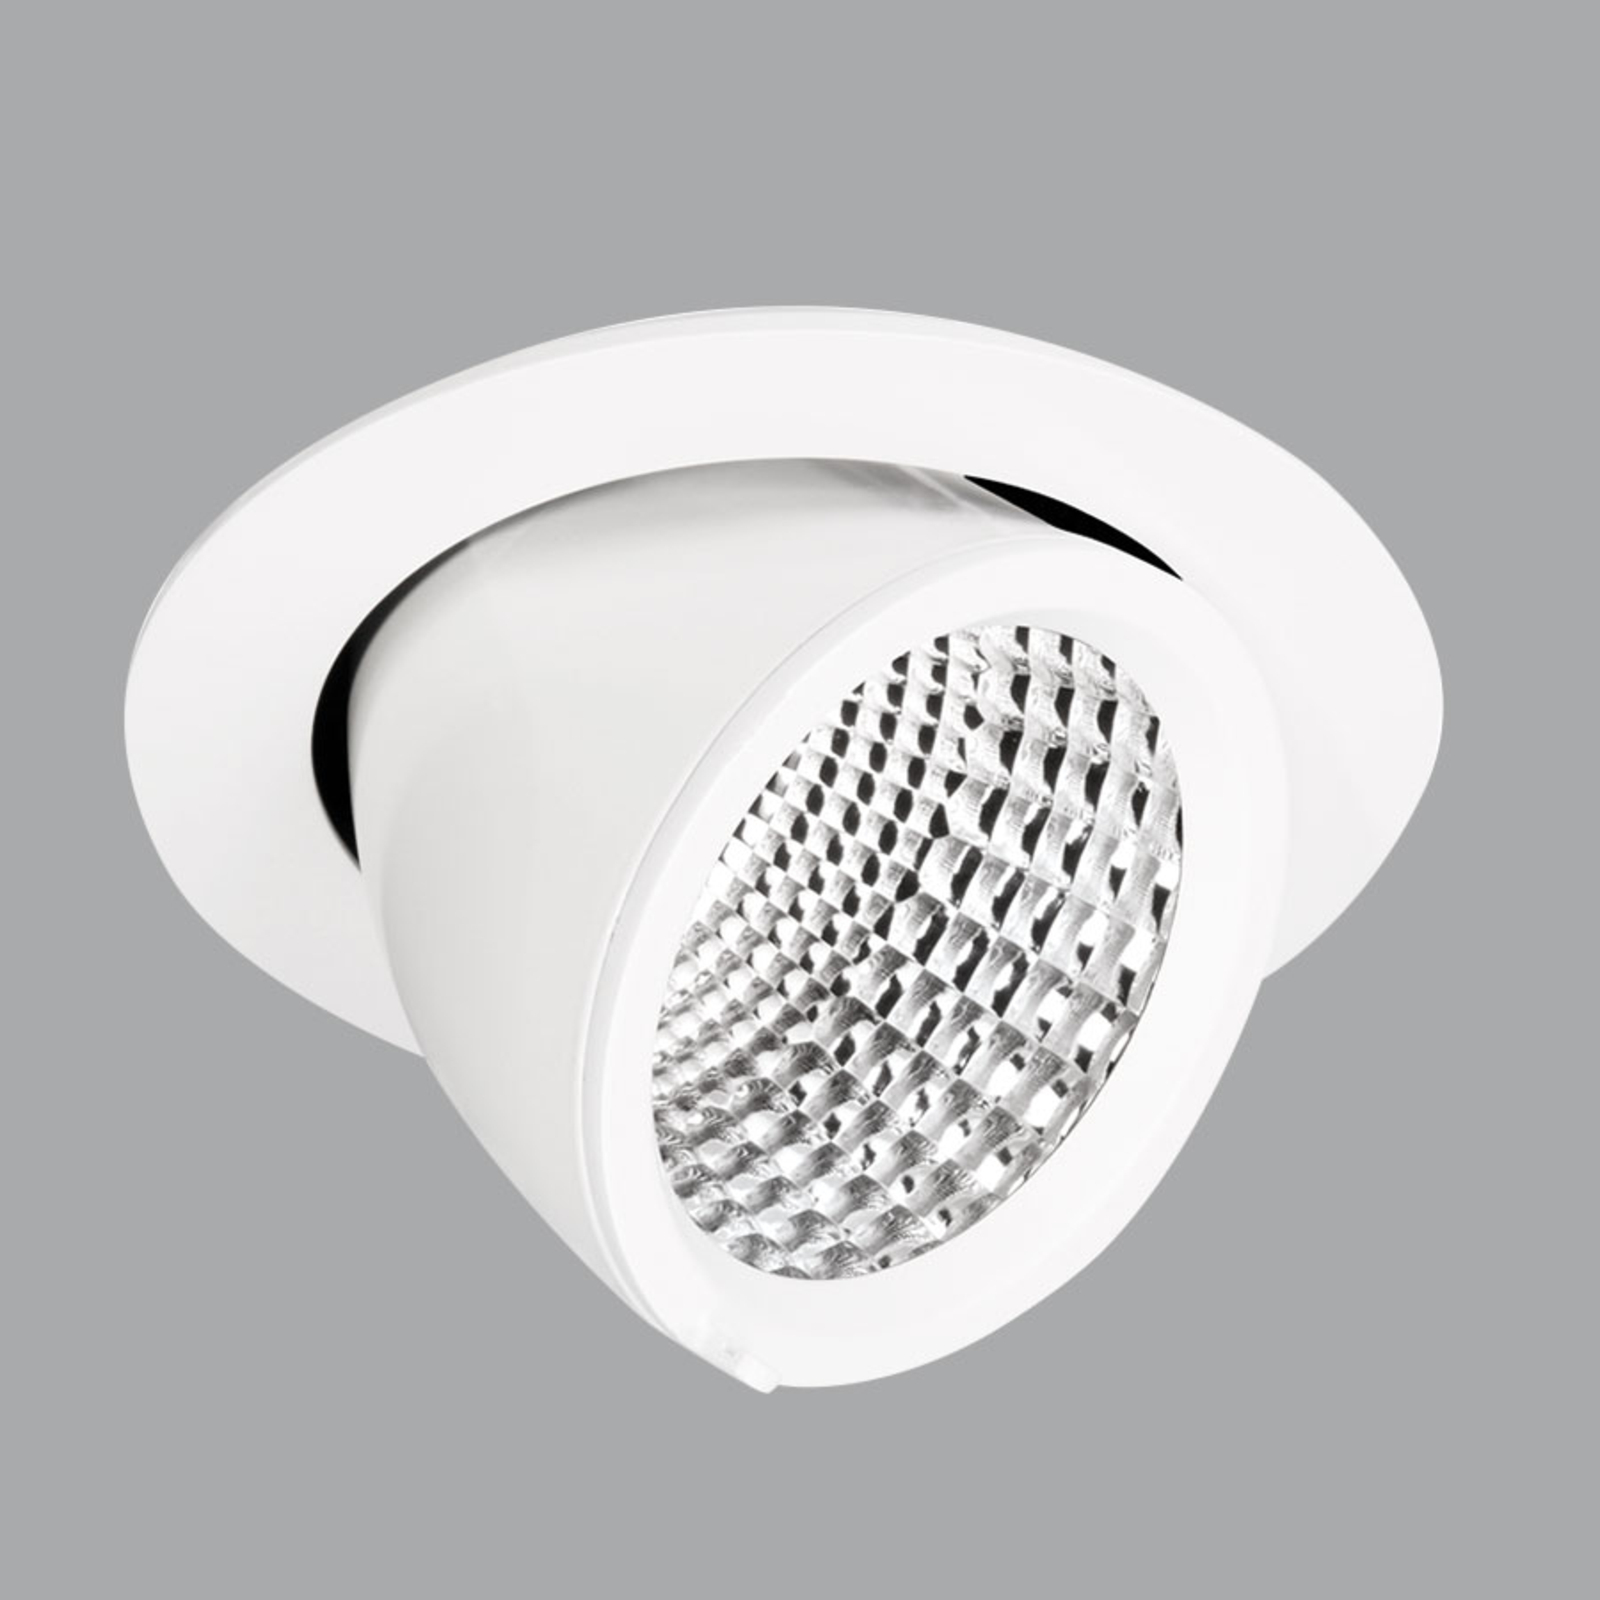 Spot Reflektor - Einbaulampe EB433 LED weiß 3.000K